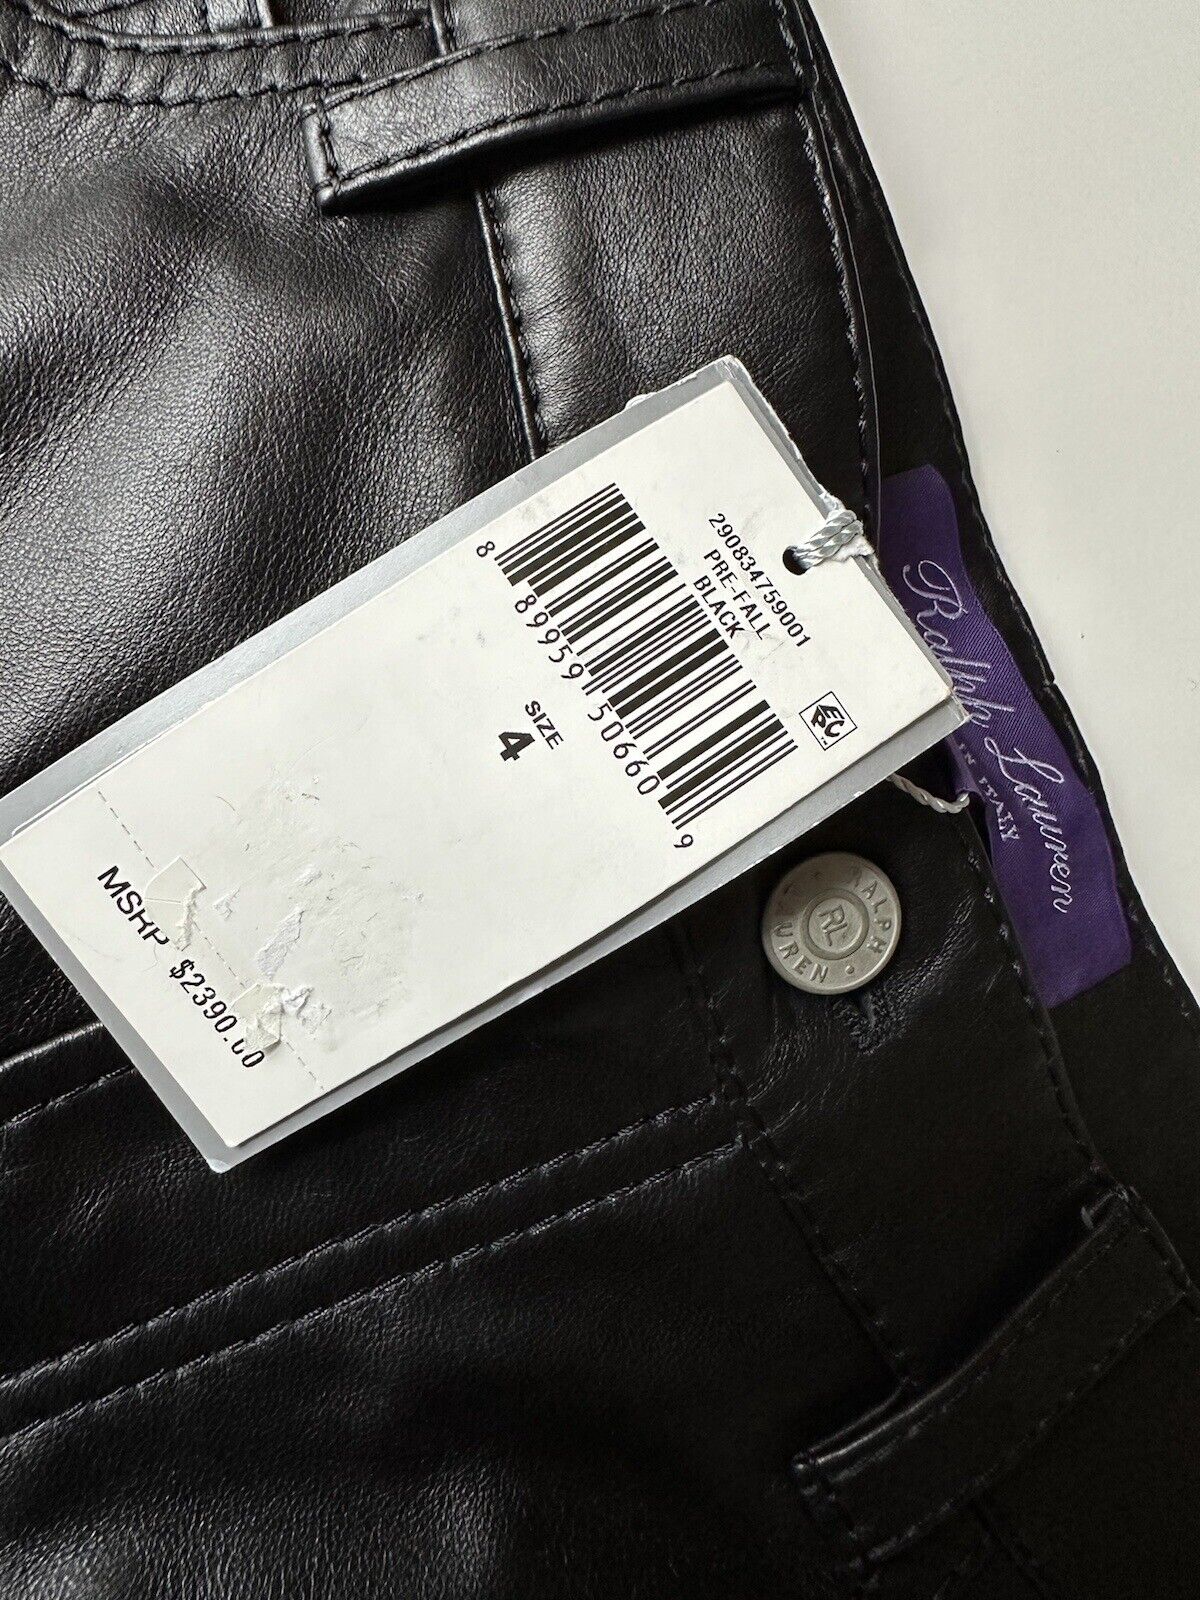 NWT $2390 Ralph Lauren Purple Label Women's Black Soft Leather Jeans 4 US Italy